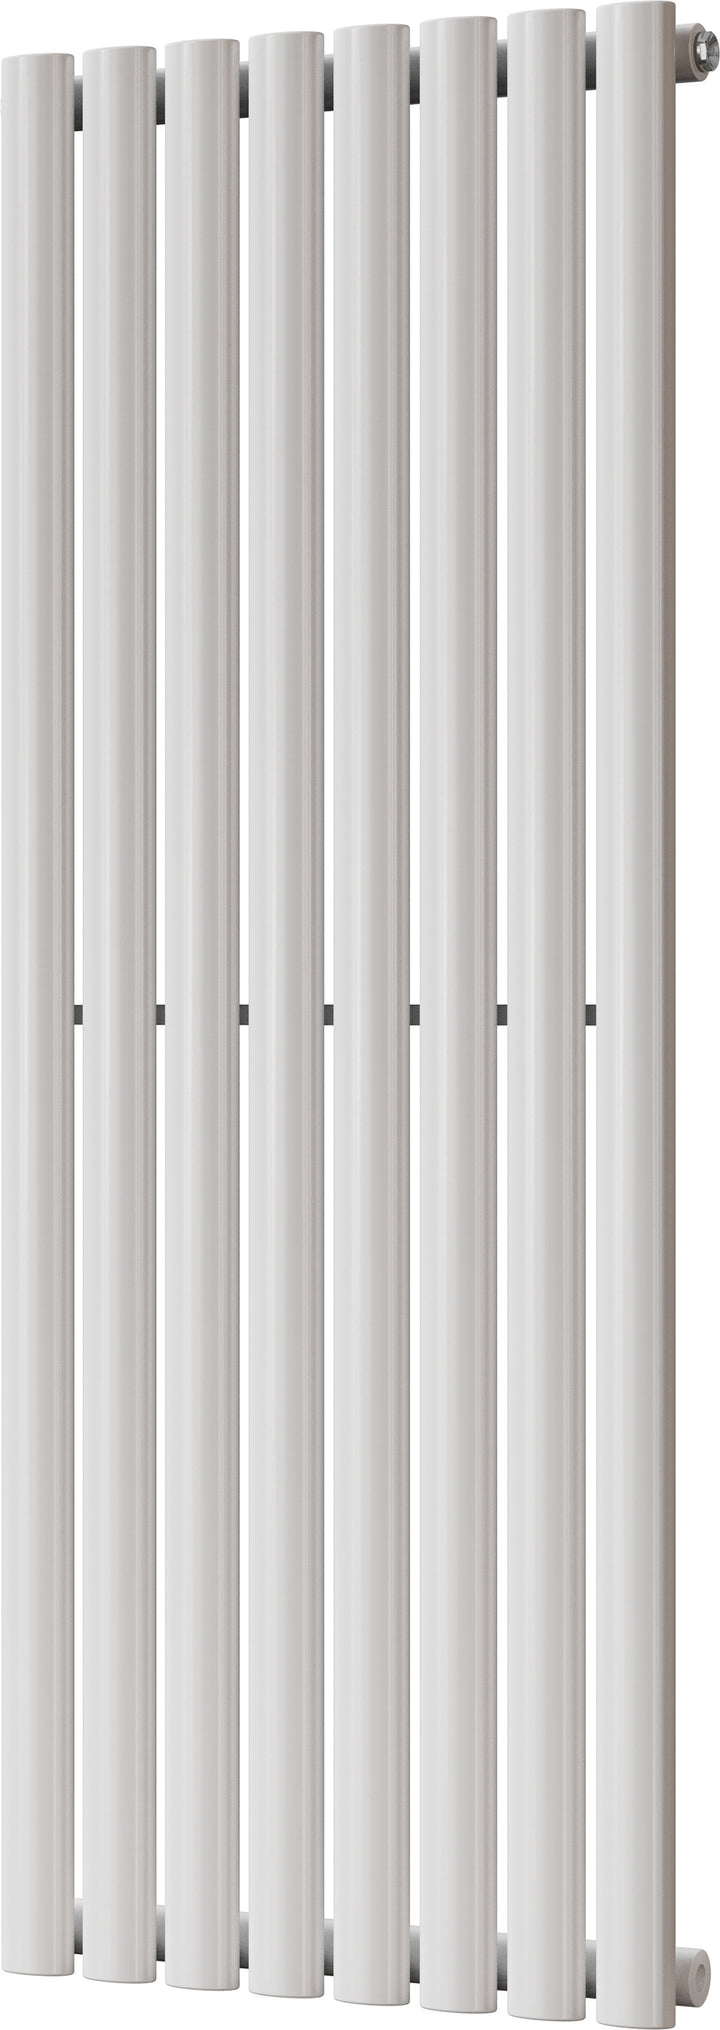 Omeara - White Vertical Radiator H1200mm x W464mm Single Panel